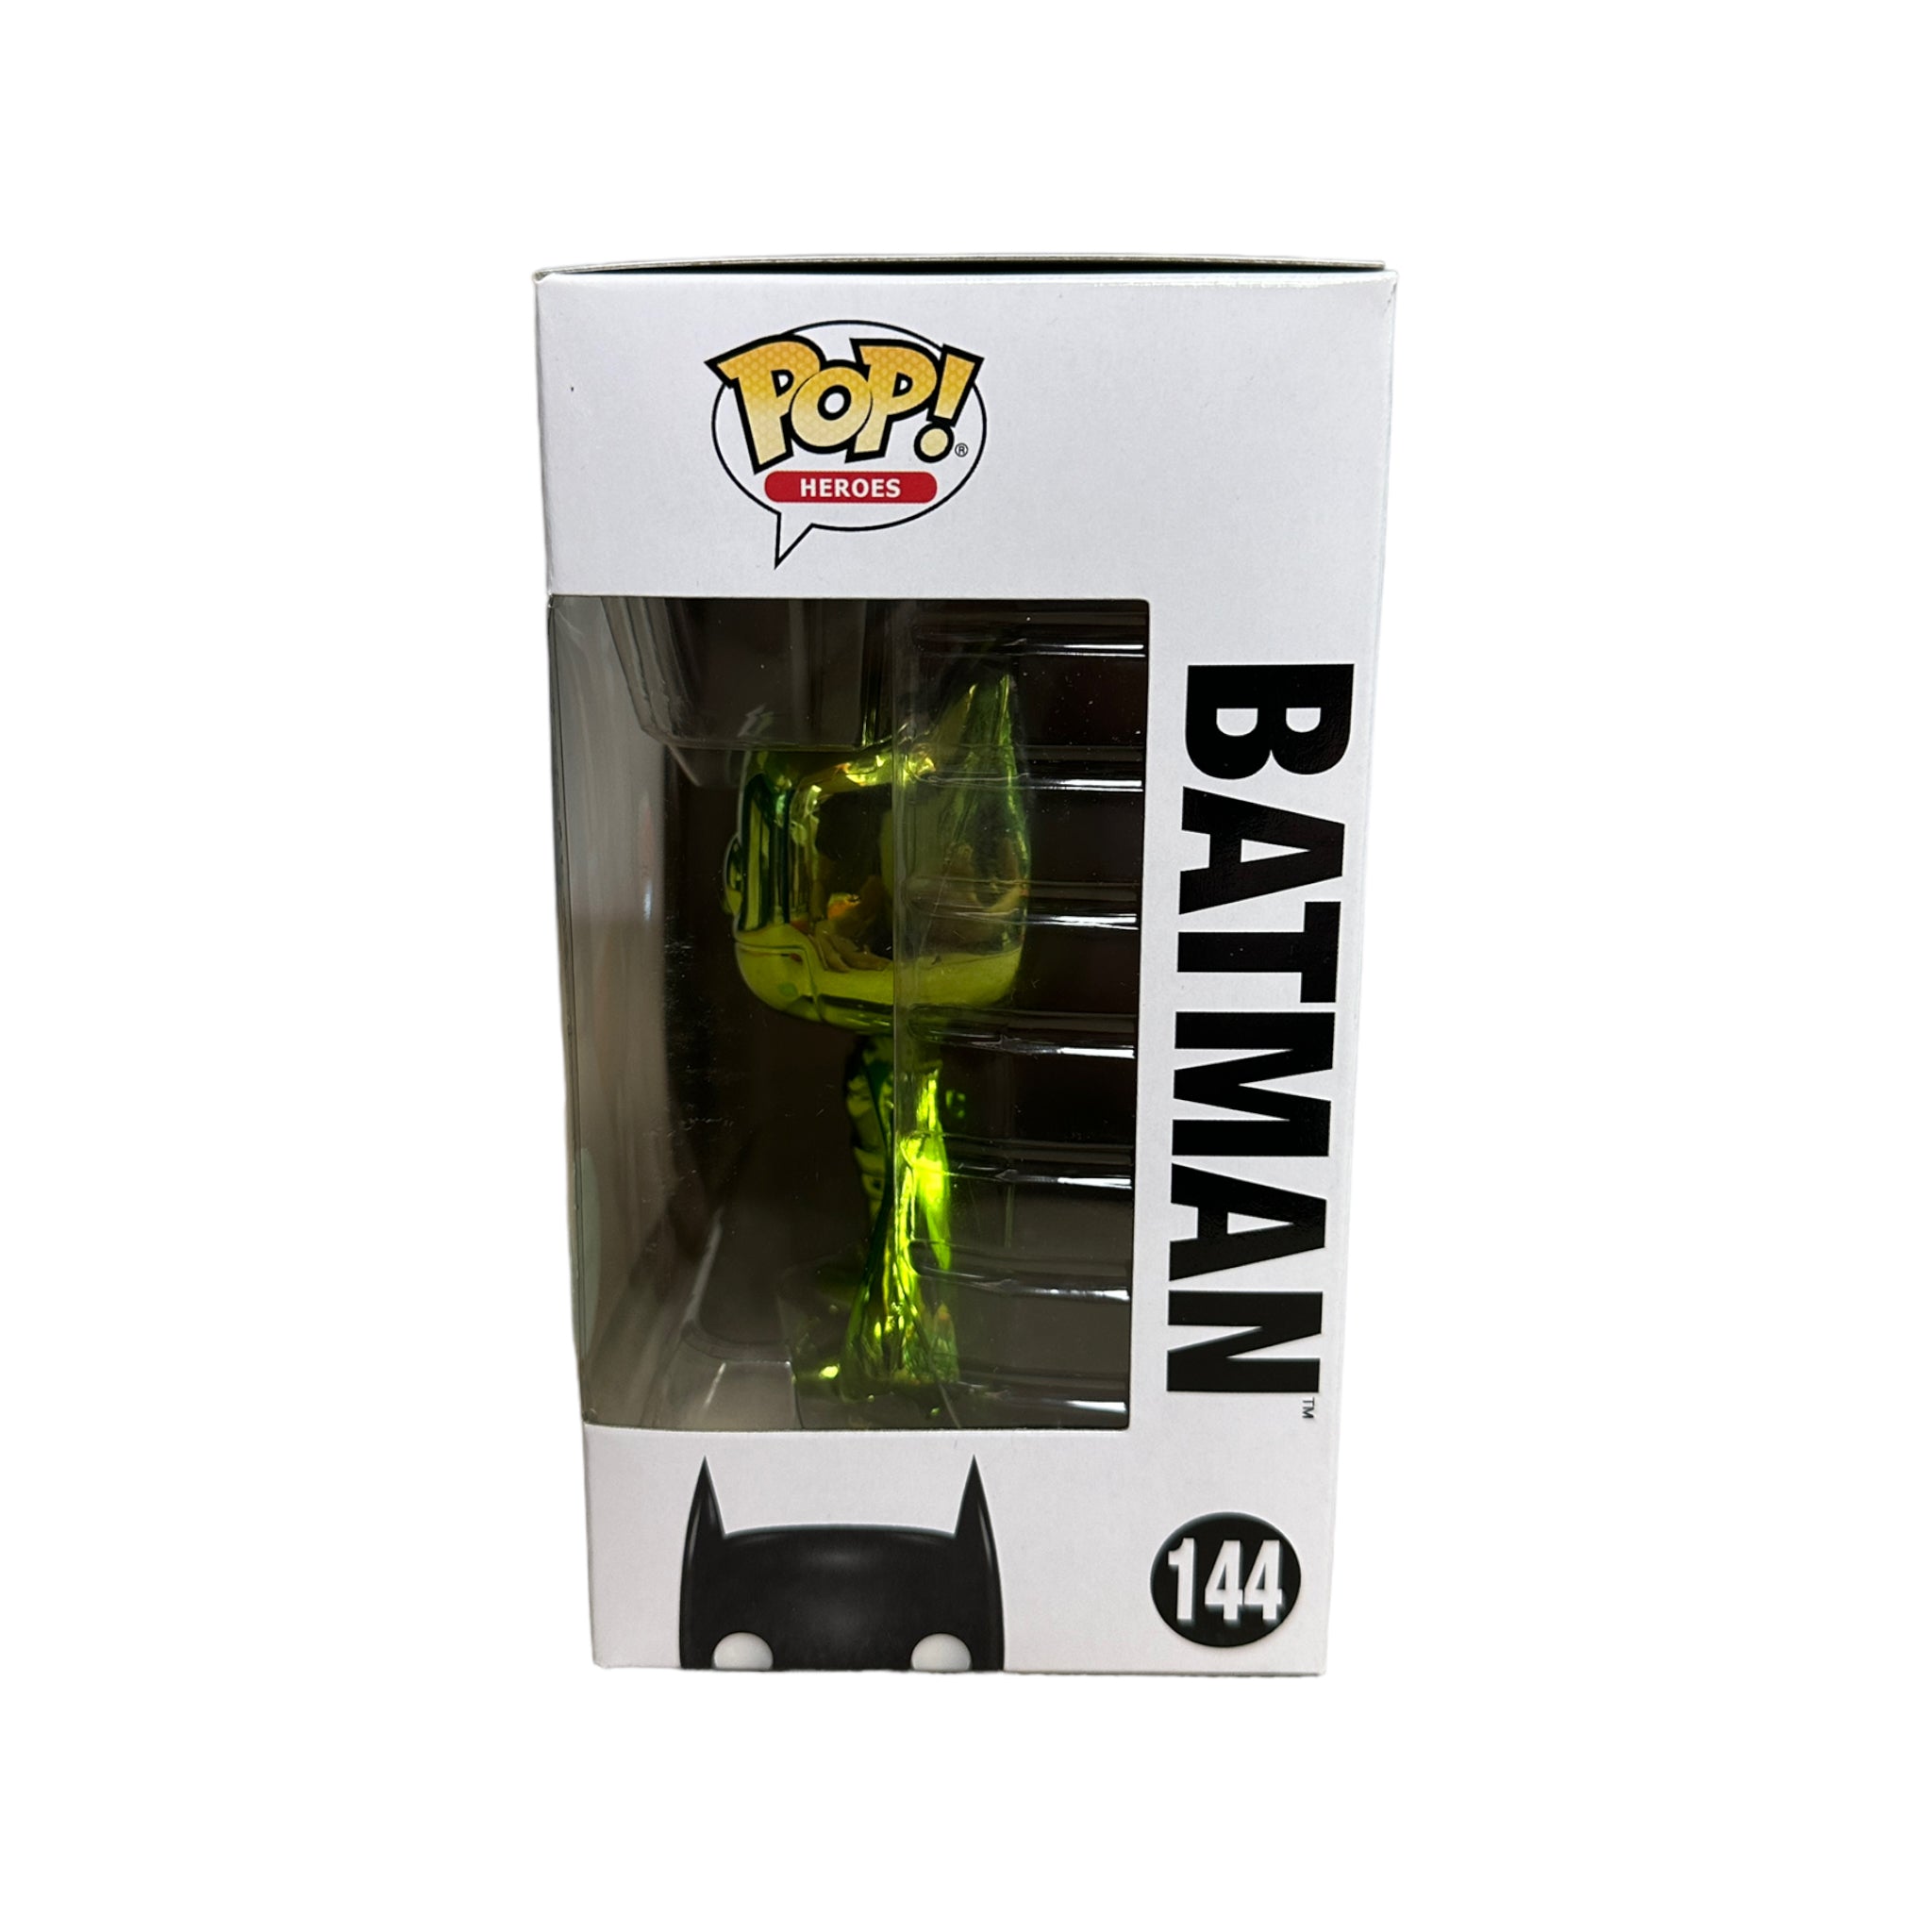 Batman #144 (Green Chrome) Funko Pop! - DC Super Heroes - ECCC 2018 Shared Exclusive LE1500 Pcs - Condition 8.75/10